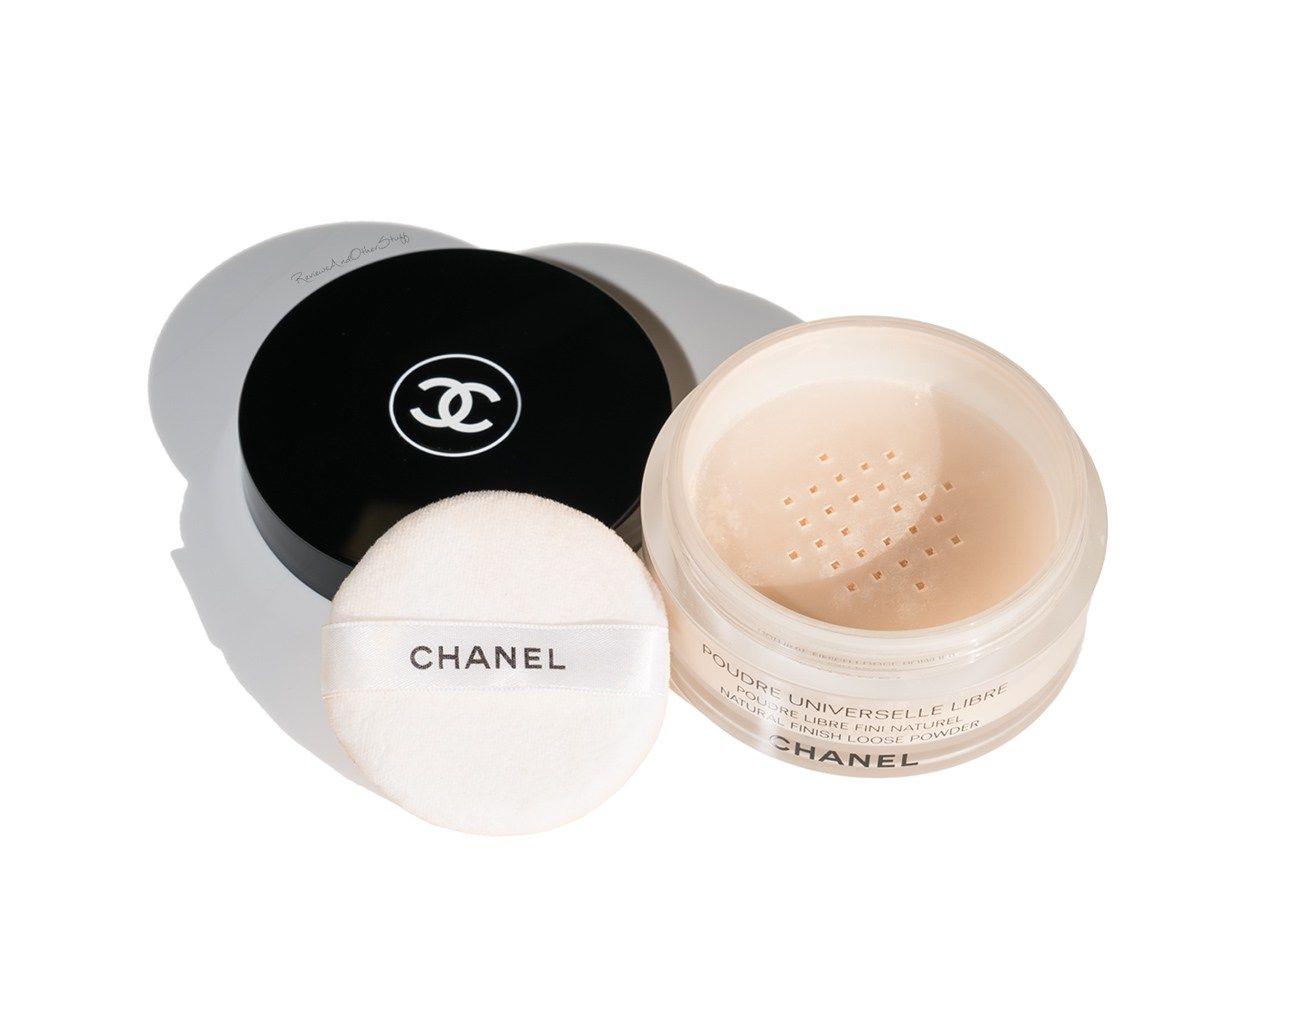 Chanel Les Beiges Healthy Glow Illuminating Powder Sunset, 0.35 oz